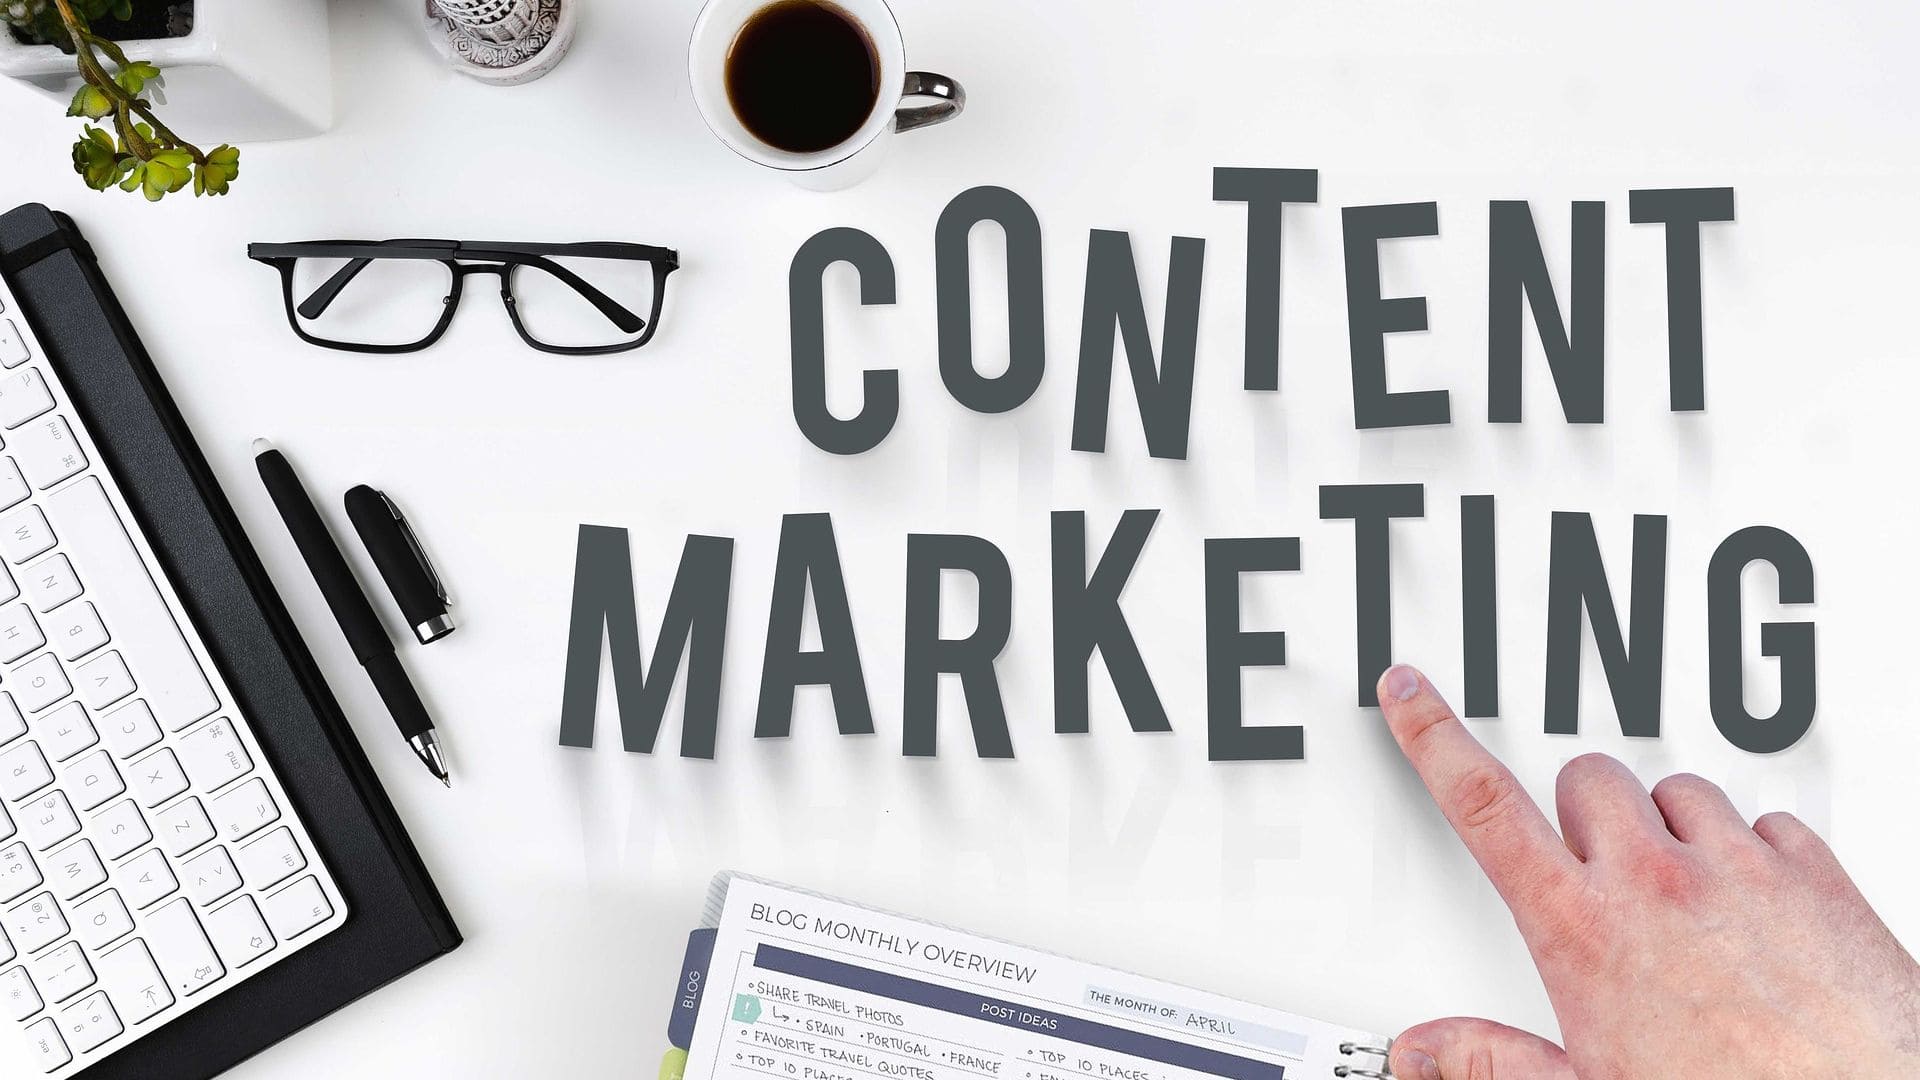 pemasaran konten, pemasaran konten adalah, contoh pemasaran konten, strategi pemasaran konten, strategi pemasaran content marketing, membuat pemasaran konten, maksud pemasaran konten, apa pemasaran konten, cara membuat pemasaran konten, pemasaran konten merek, pemasaran konten artikel, apa itu pemasaran konten, artikel pemasaran konten,